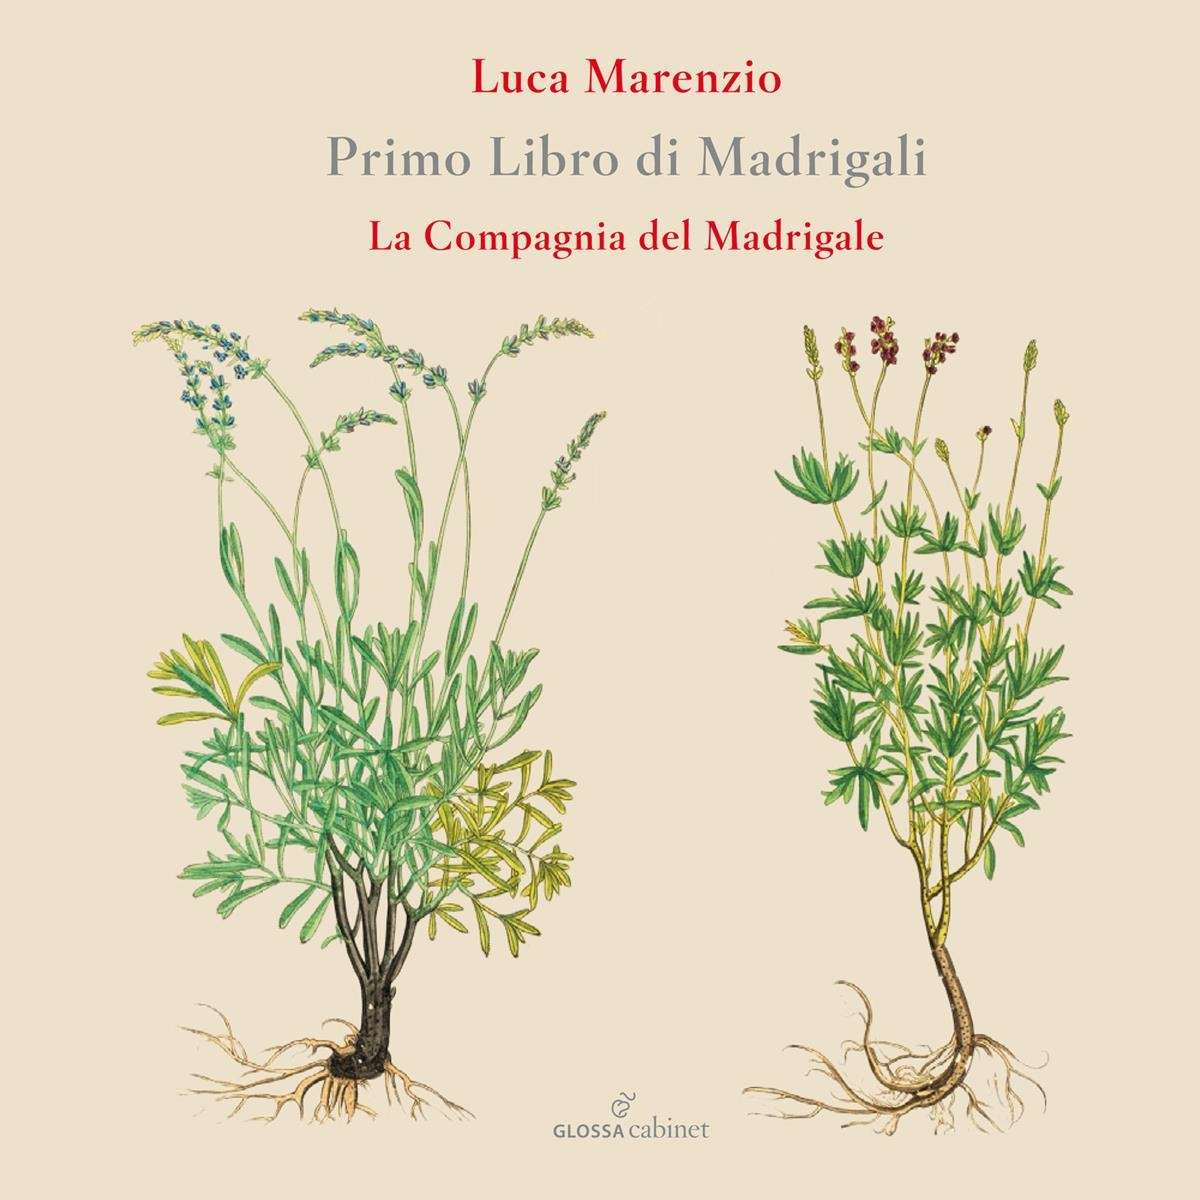 LUCA MARENZIO: FIRST BOOK OF MADRIGALS (1580)